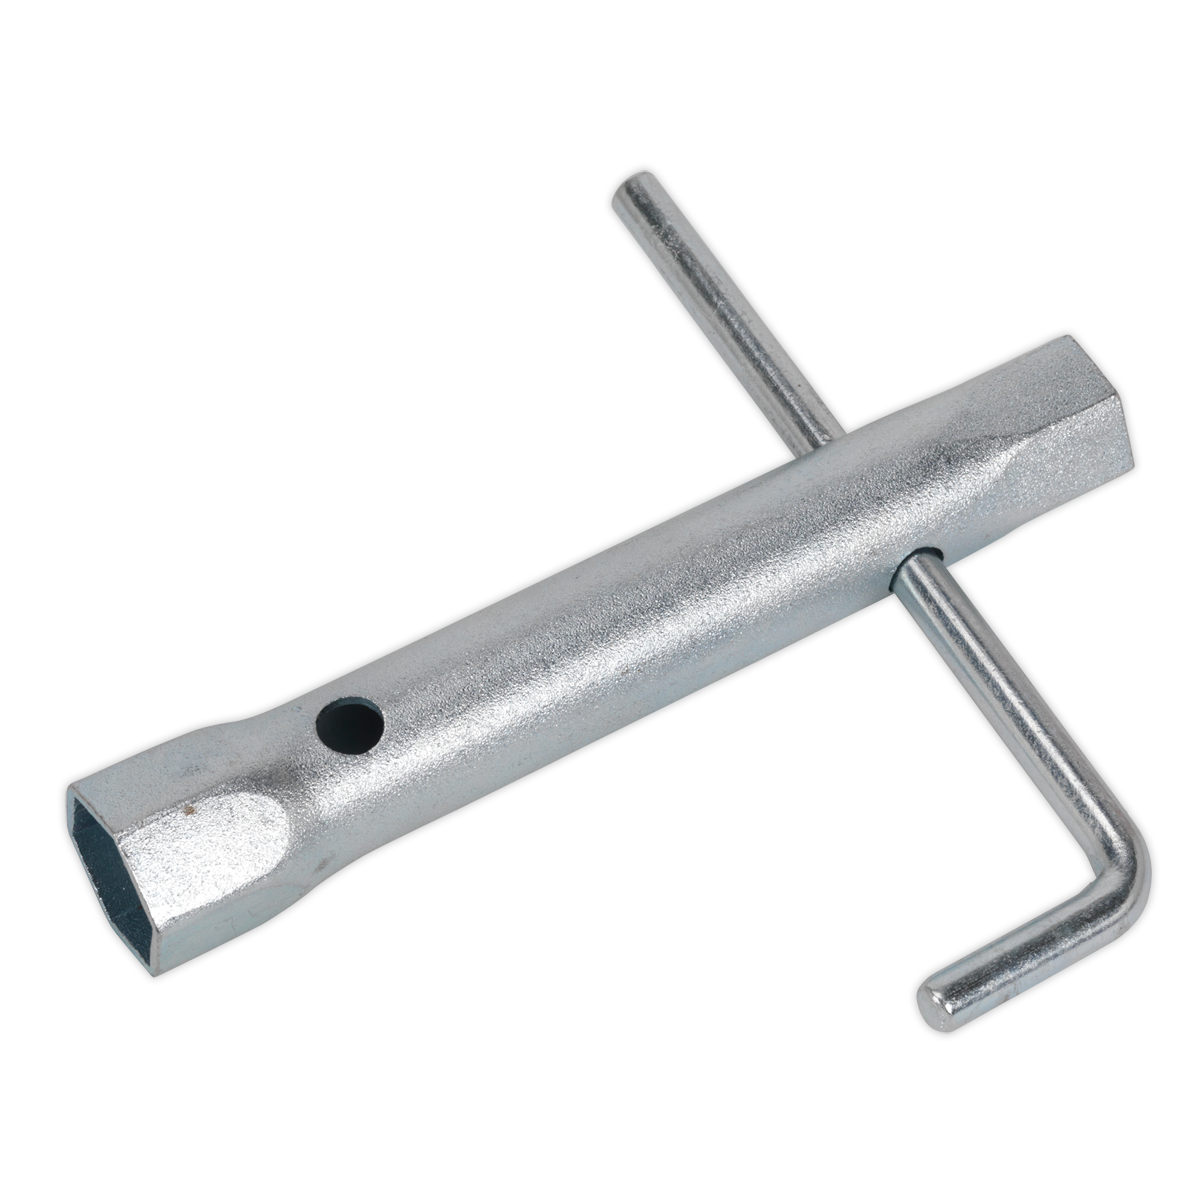 Double End Long Reach Spark Plug Box Spanner 17/21mm with L-Bar